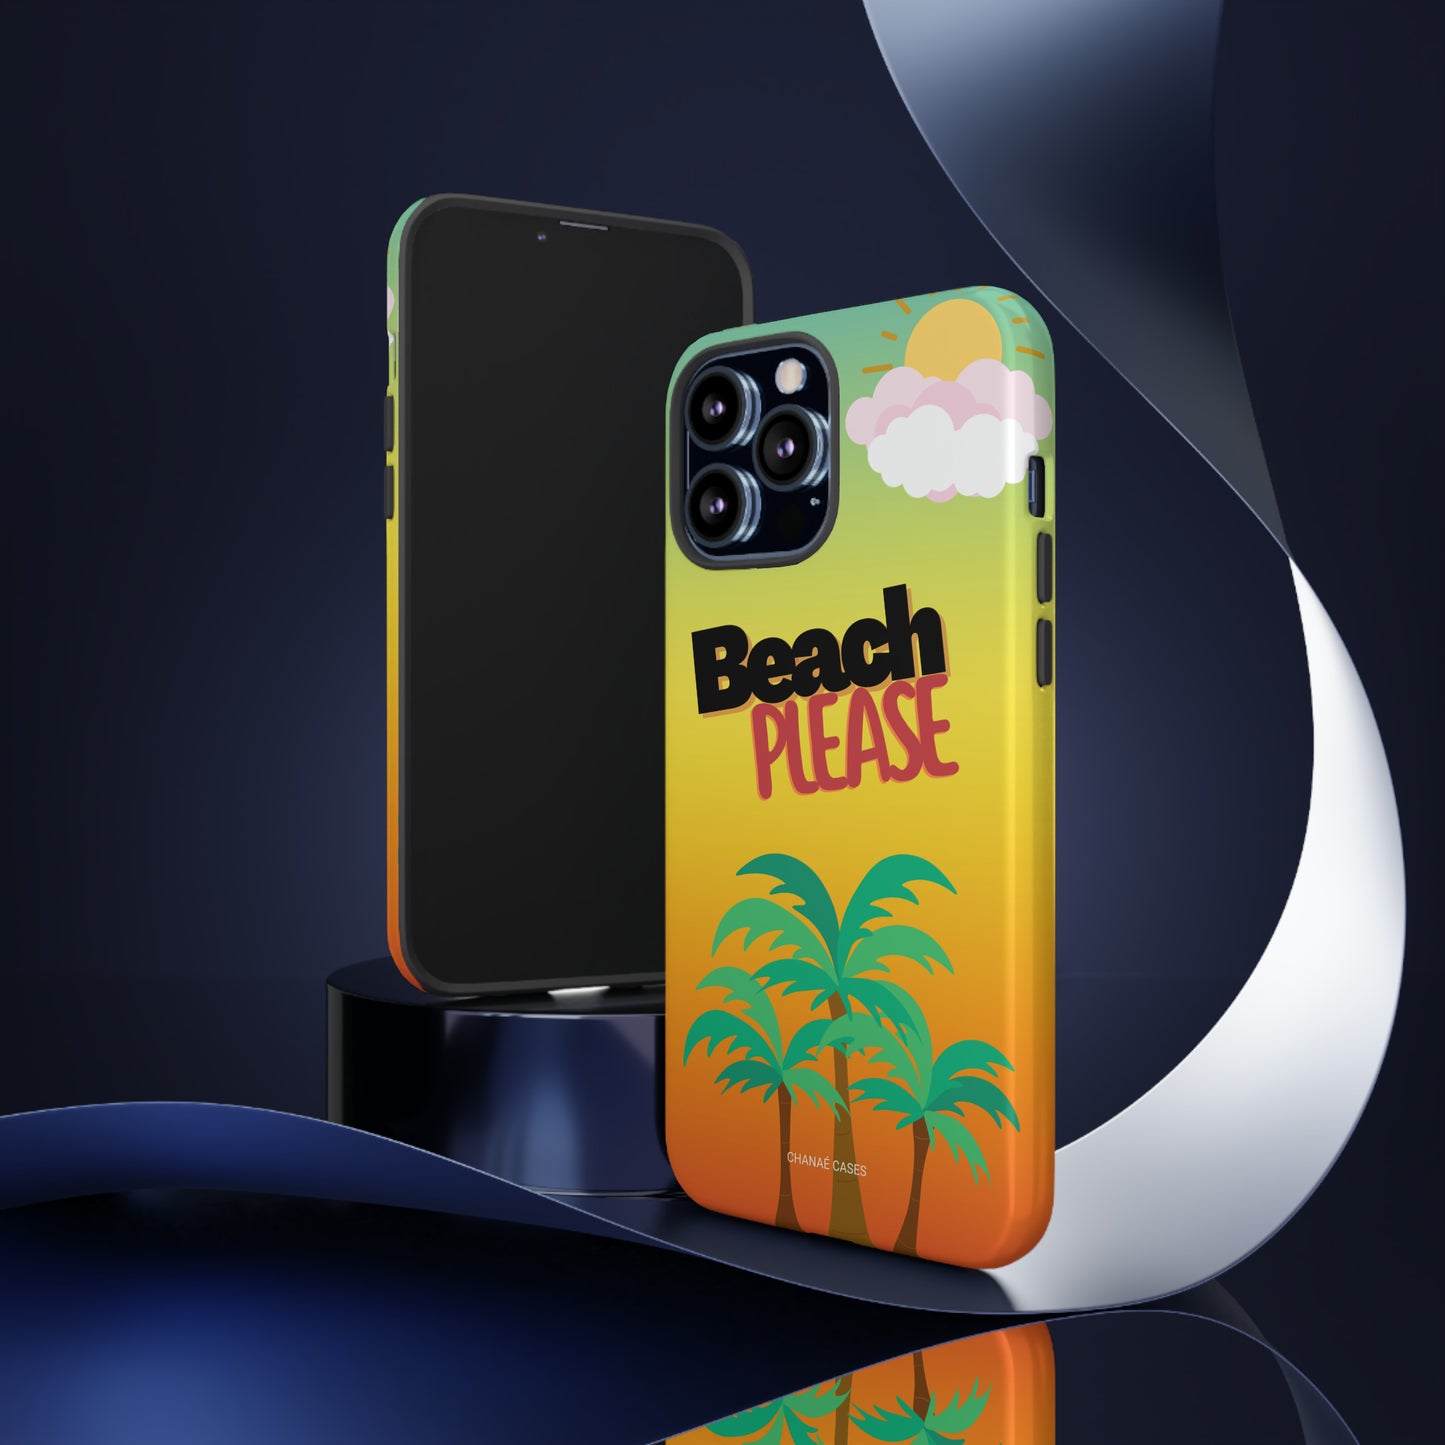 Beach Please iPhone "Tough" Case (Multi)